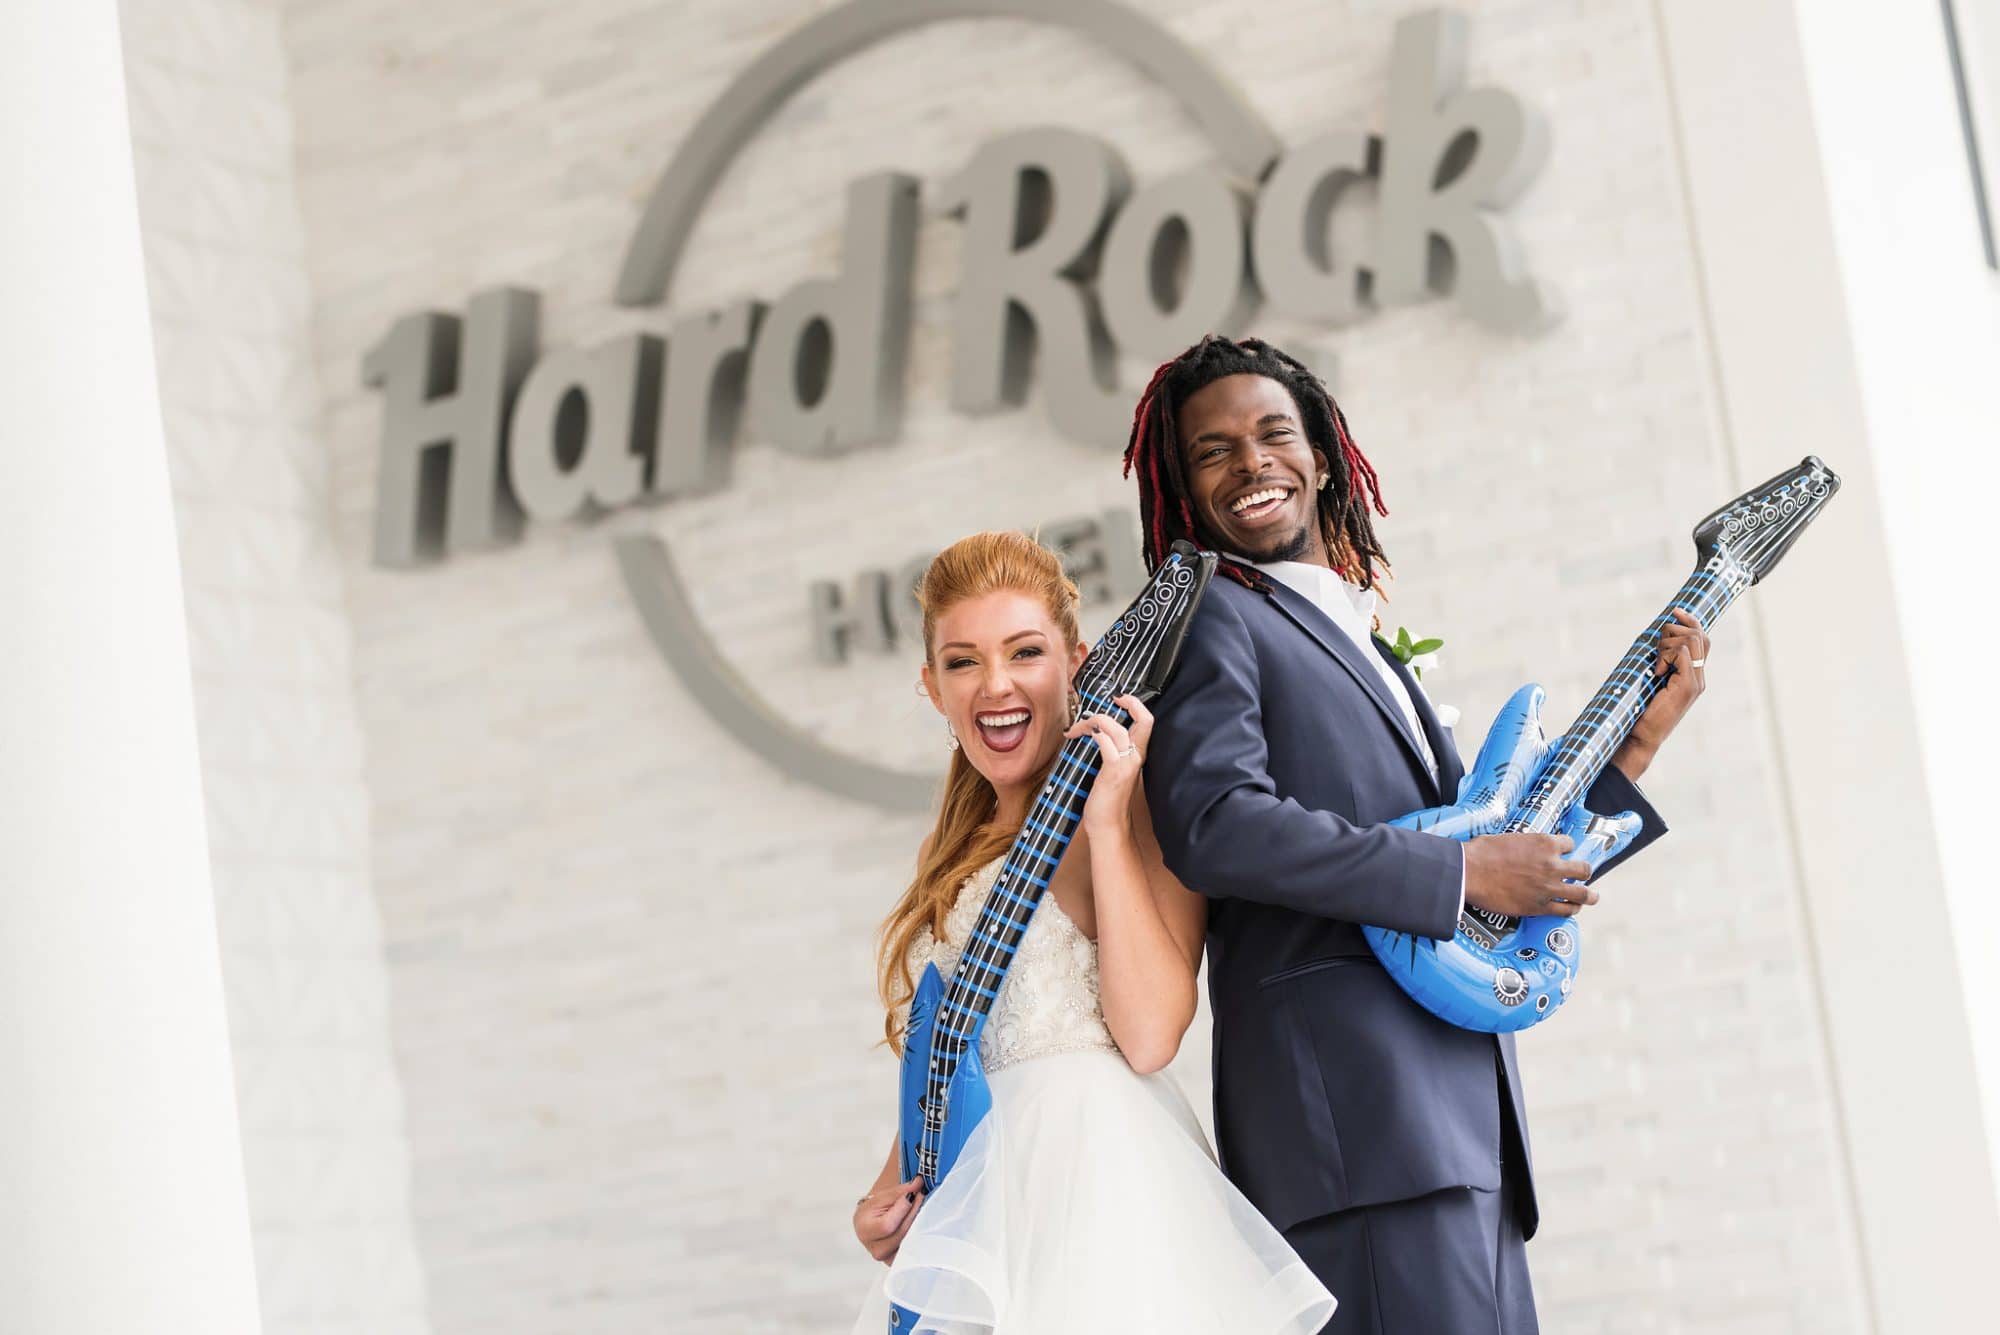 Hard Rock Hotel Daytona Beach - newlyweds playing pretend guitar in front of Hard Rock logo